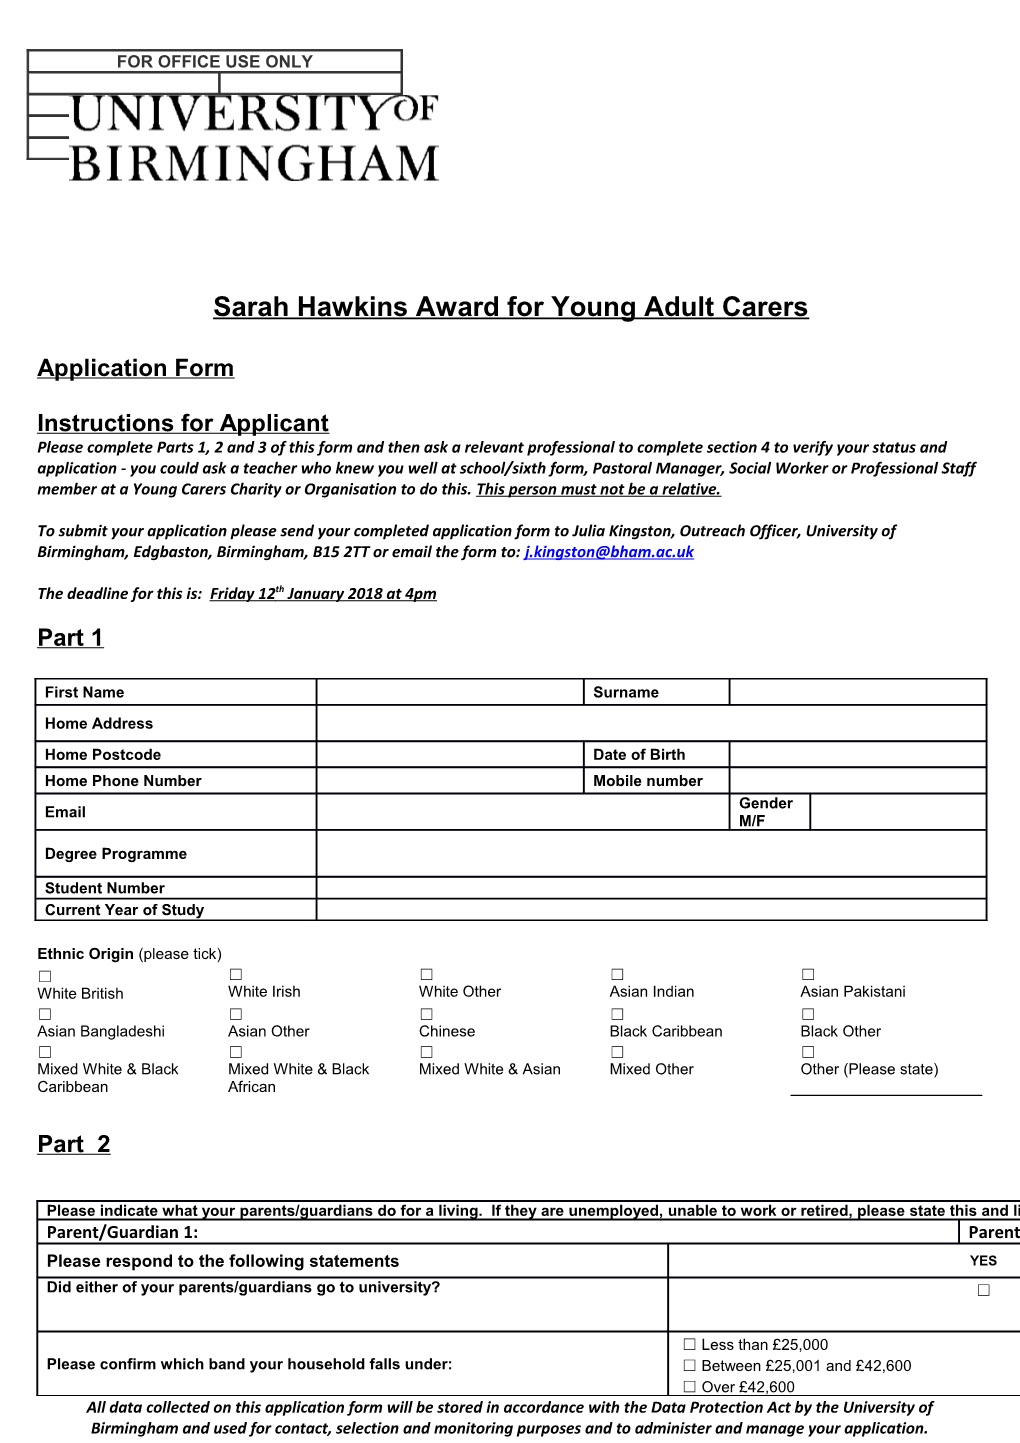 Sarah Hawkins Awardfor Young Adult Carers